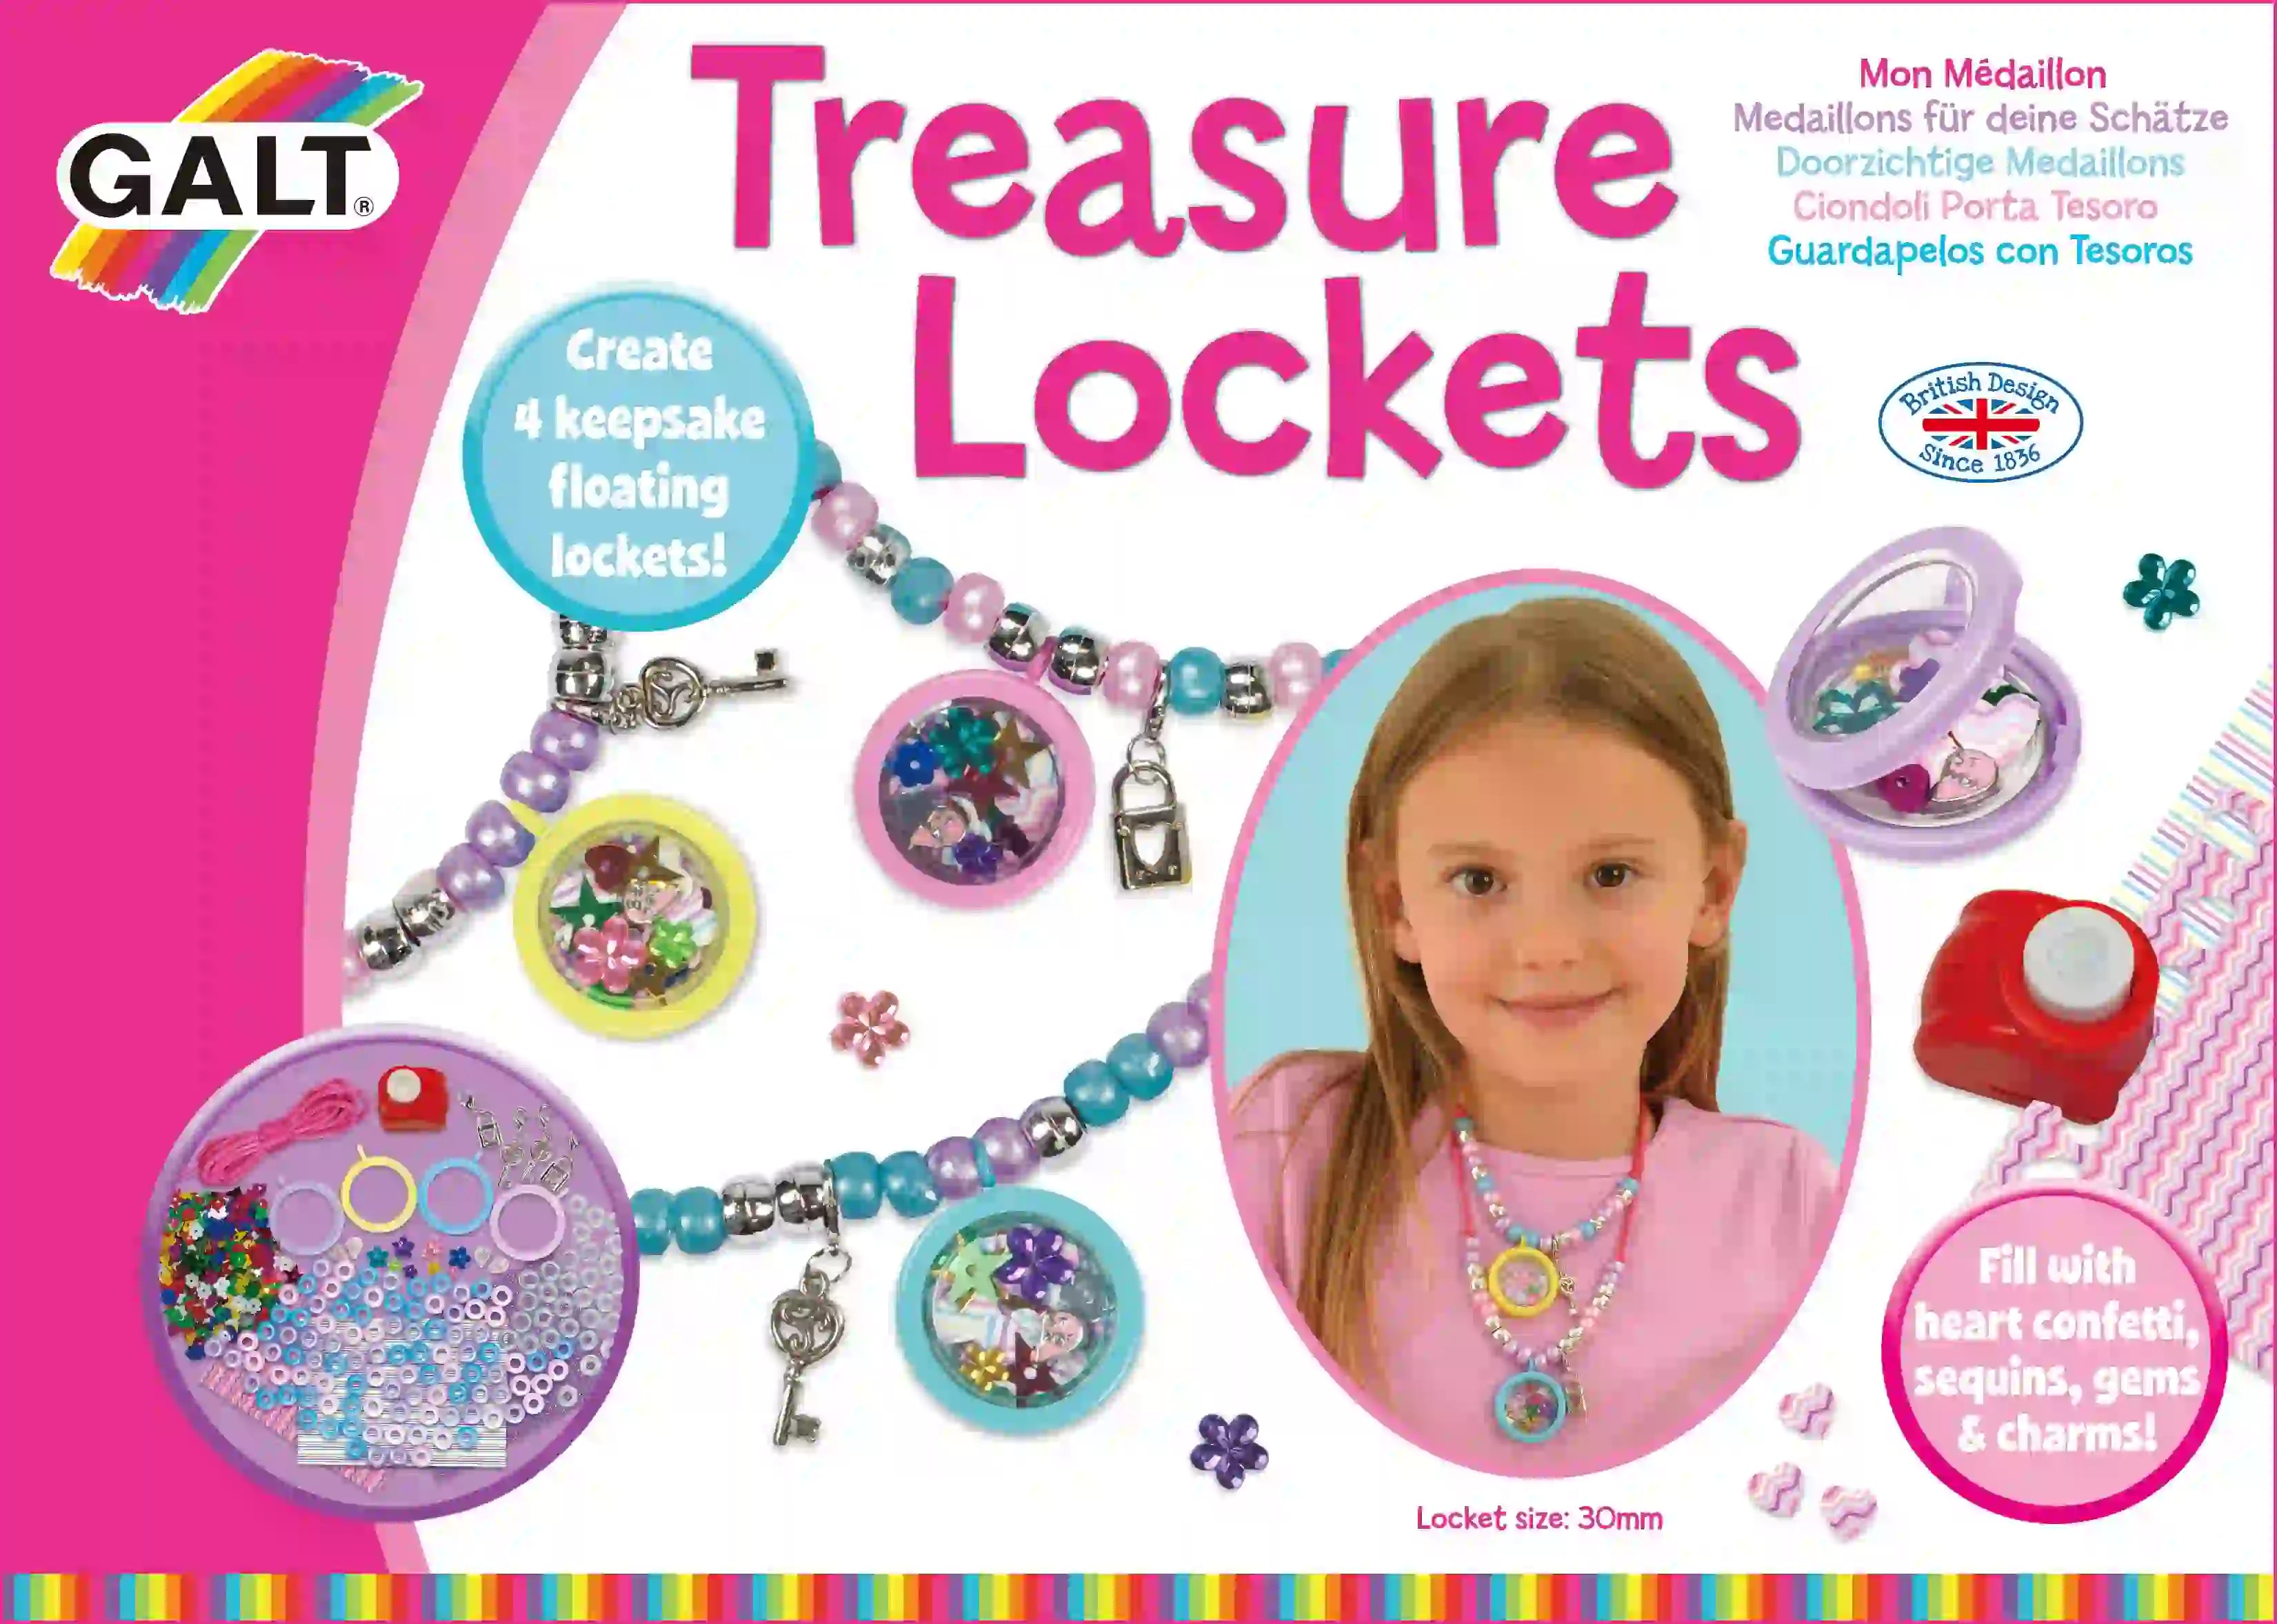 Galt - Treasure Lockets